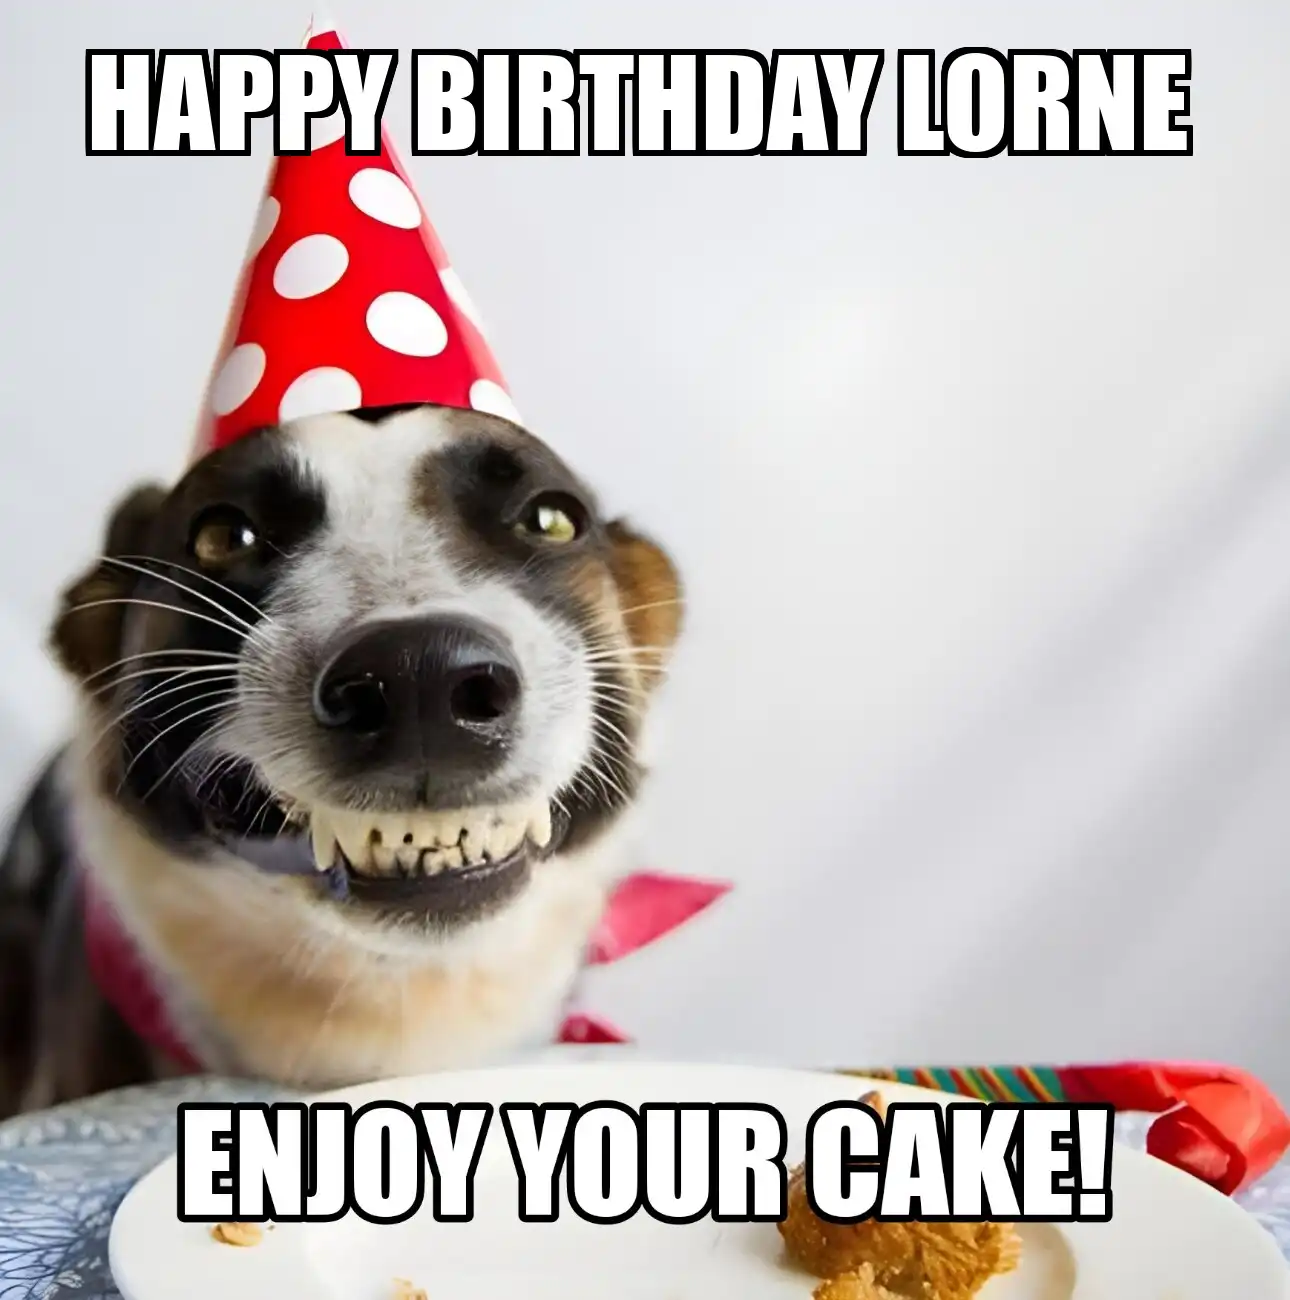 Happy Birthday Lorne Enjoy Your Cake Dog Meme